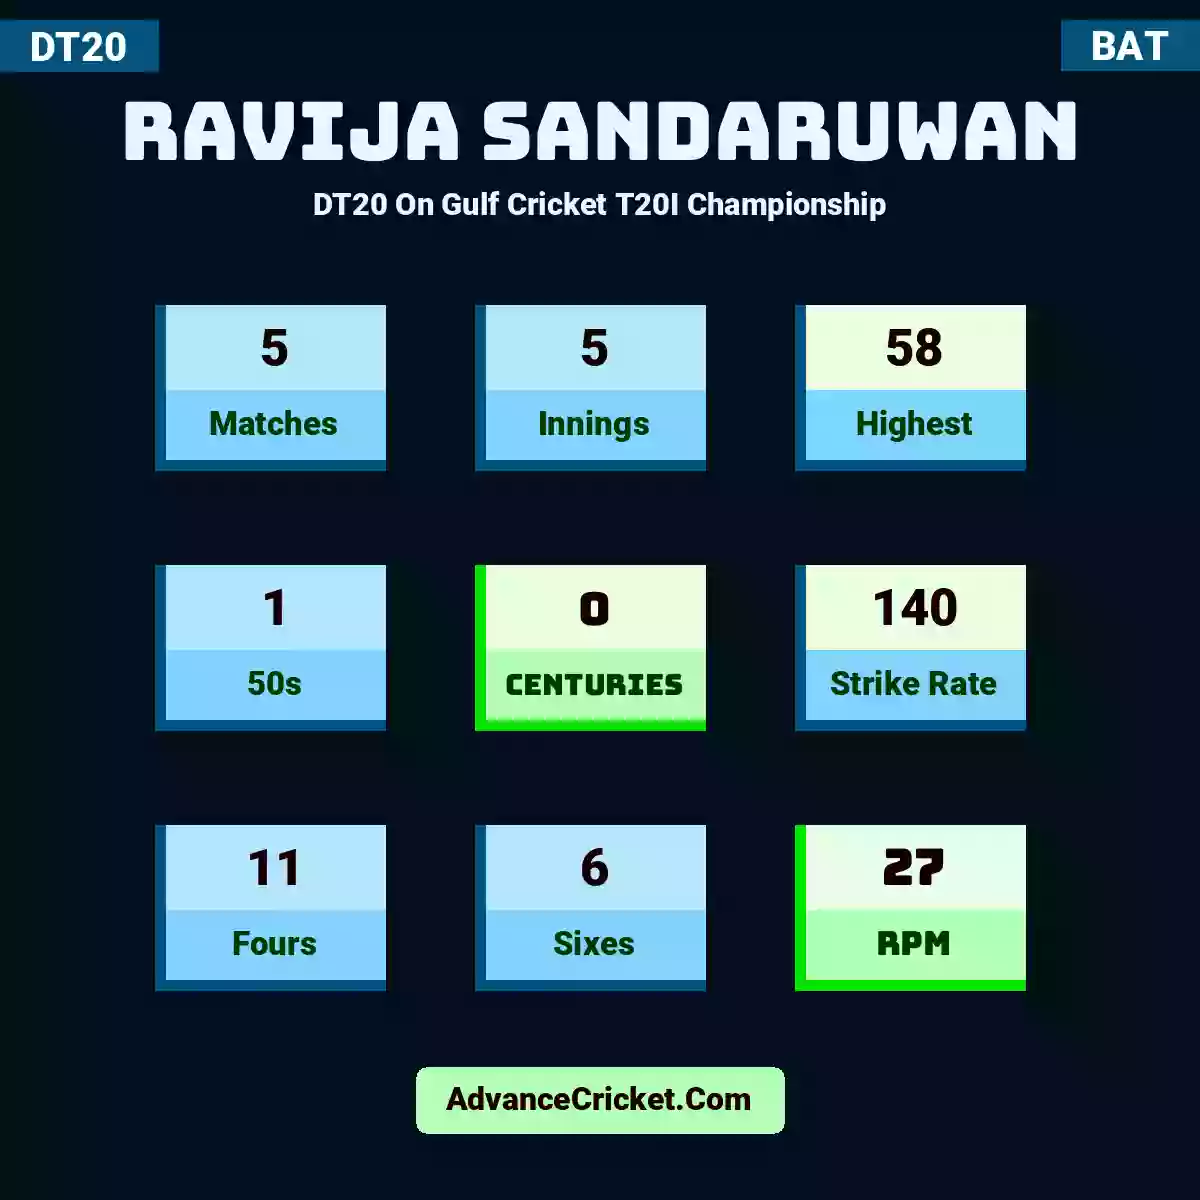 Ravija Sandaruwan DT20  On Gulf Cricket T20I Championship, Ravija Sandaruwan played 5 matches, scored 58 runs as highest, 1 half-centuries, and 0 centuries, with a strike rate of 140. R.Sandaruwan hit 11 fours and 6 sixes, with an RPM of 27.